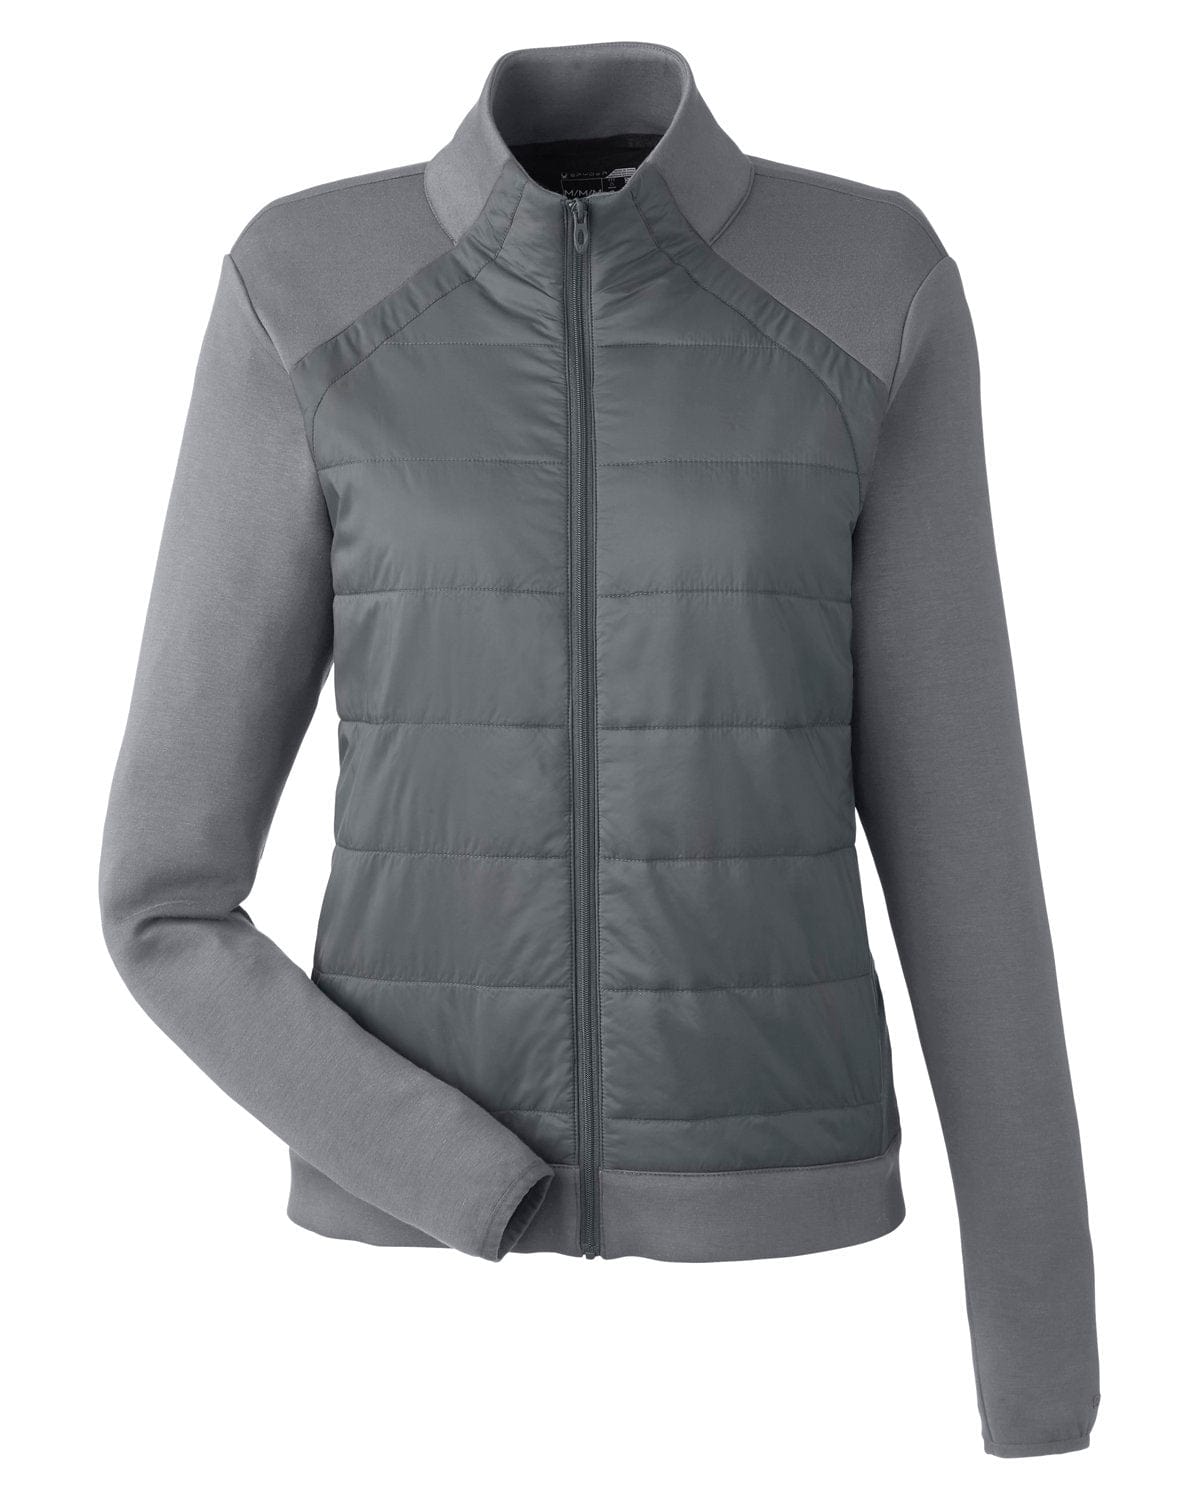 Spyder Outerwear XS / Polar Spyder - Women's Impact Full-Zip Jacket